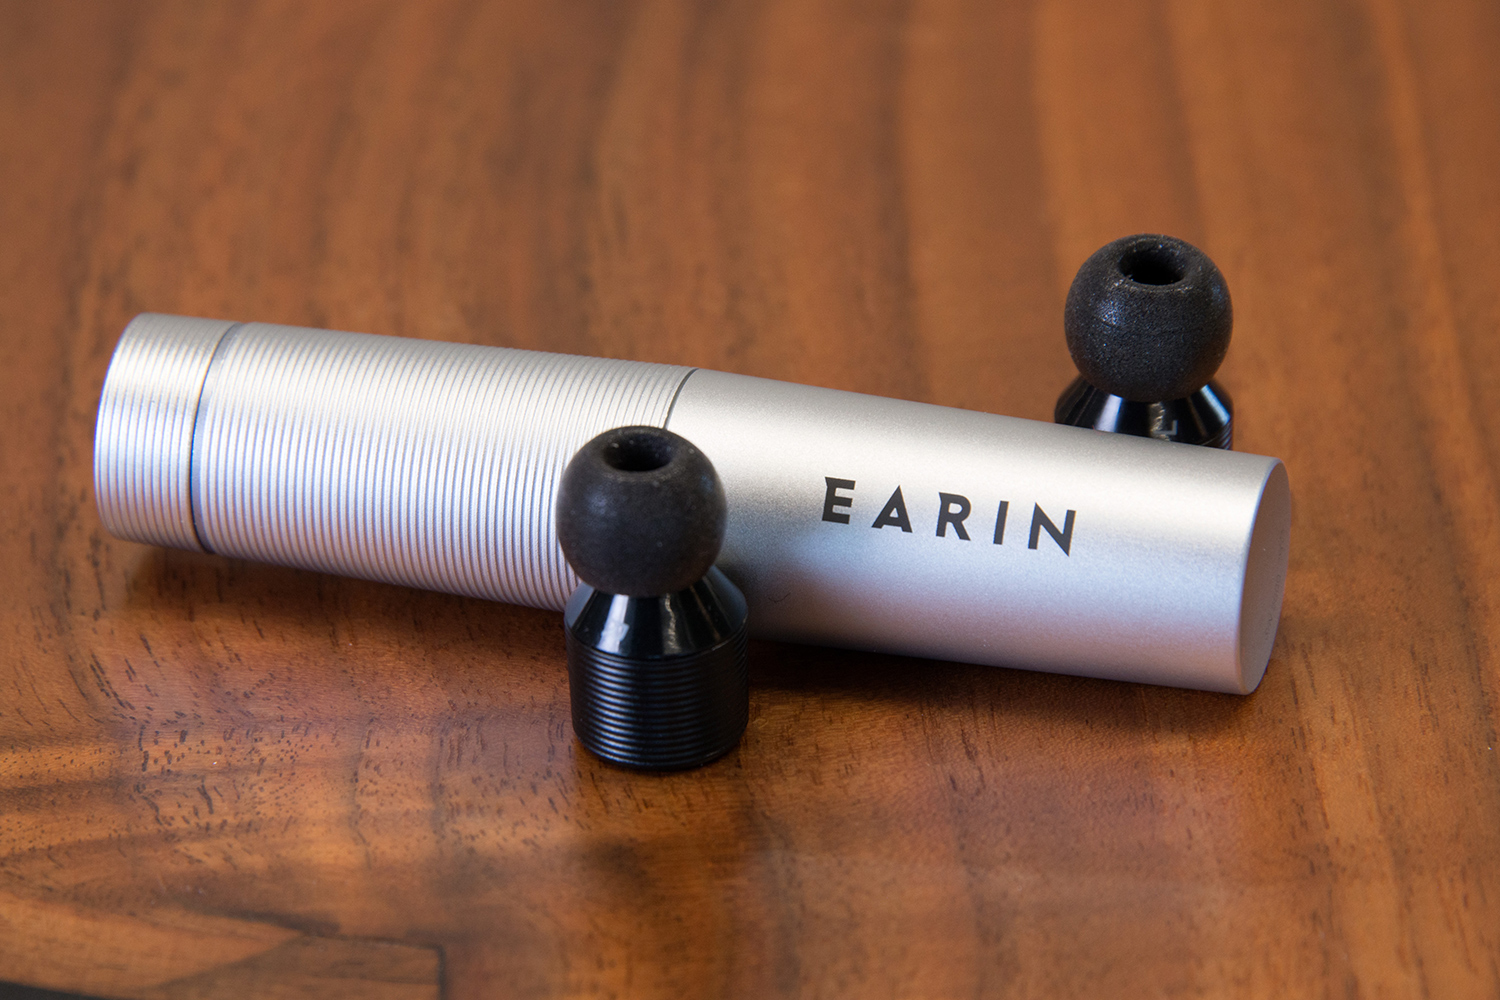 earin wireless earbuds hands on review video bt hero4